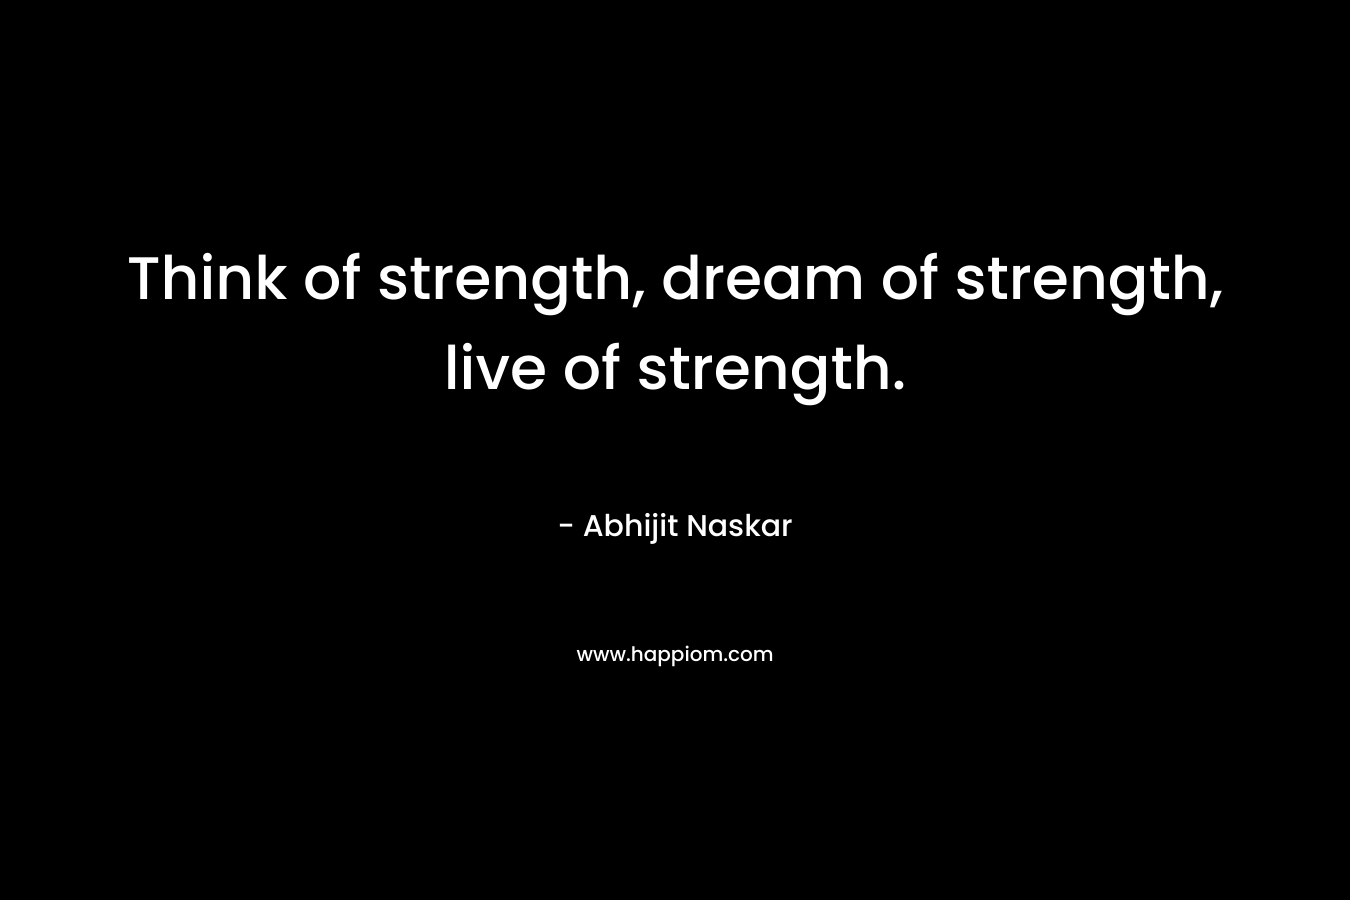 Think of strength, dream of strength, live of strength.